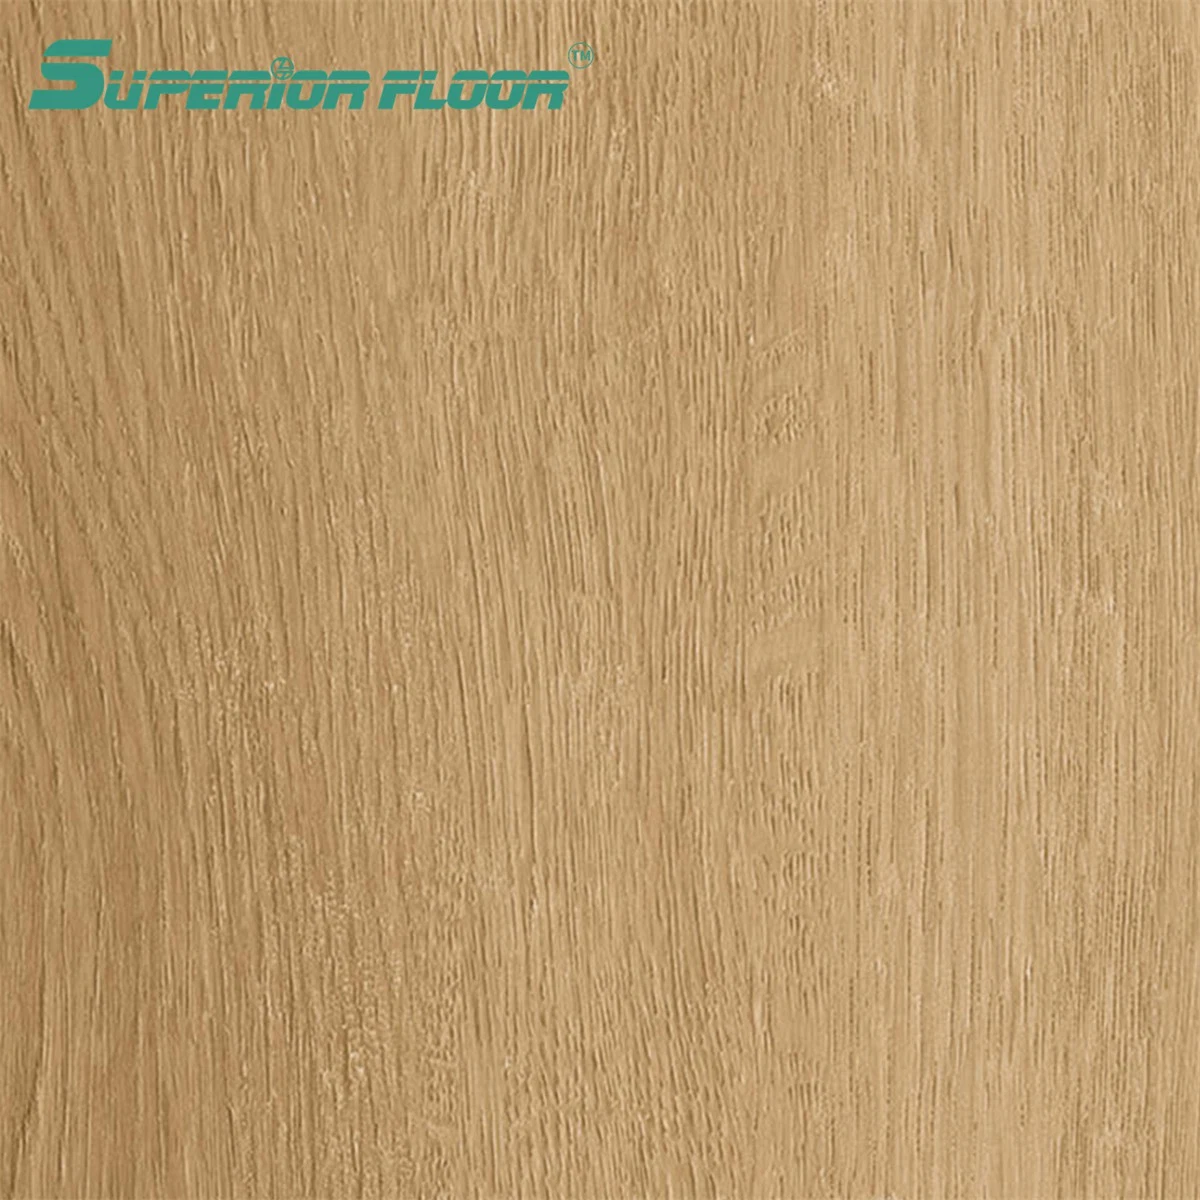 100% Waterproof Click Spc Rigid Vinyl Plank Herringbone Flooring for Laundry Room, Kitchens, Restaurants